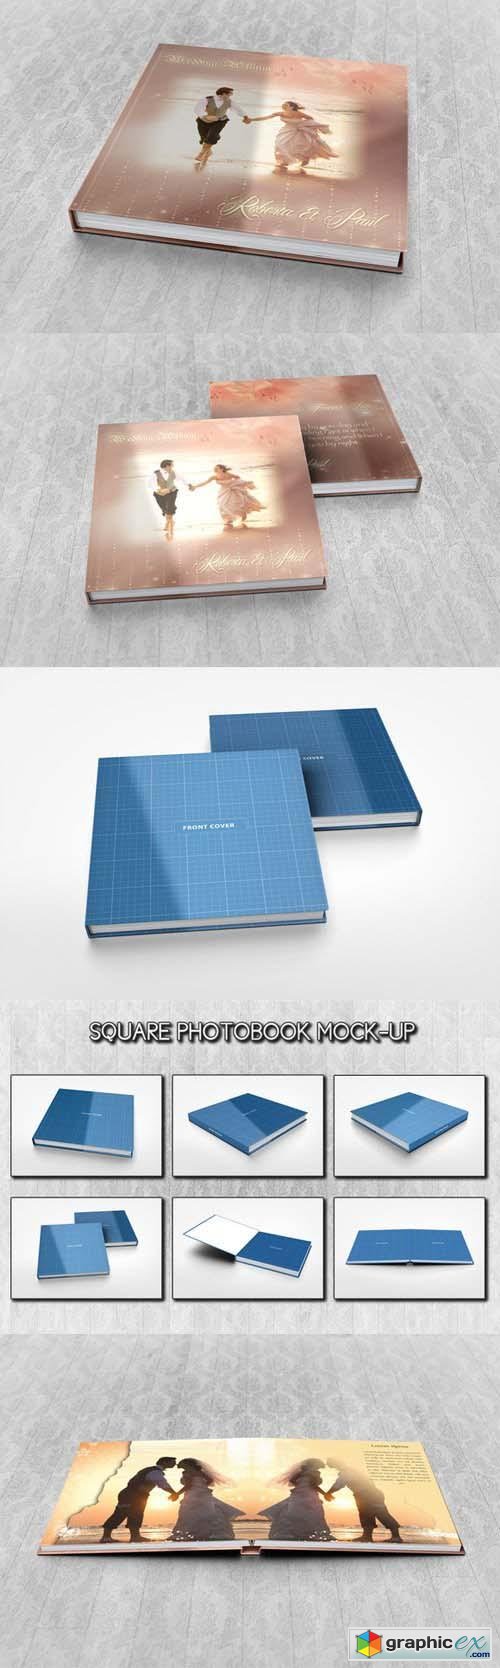 Square Photobook Mock-up 37516